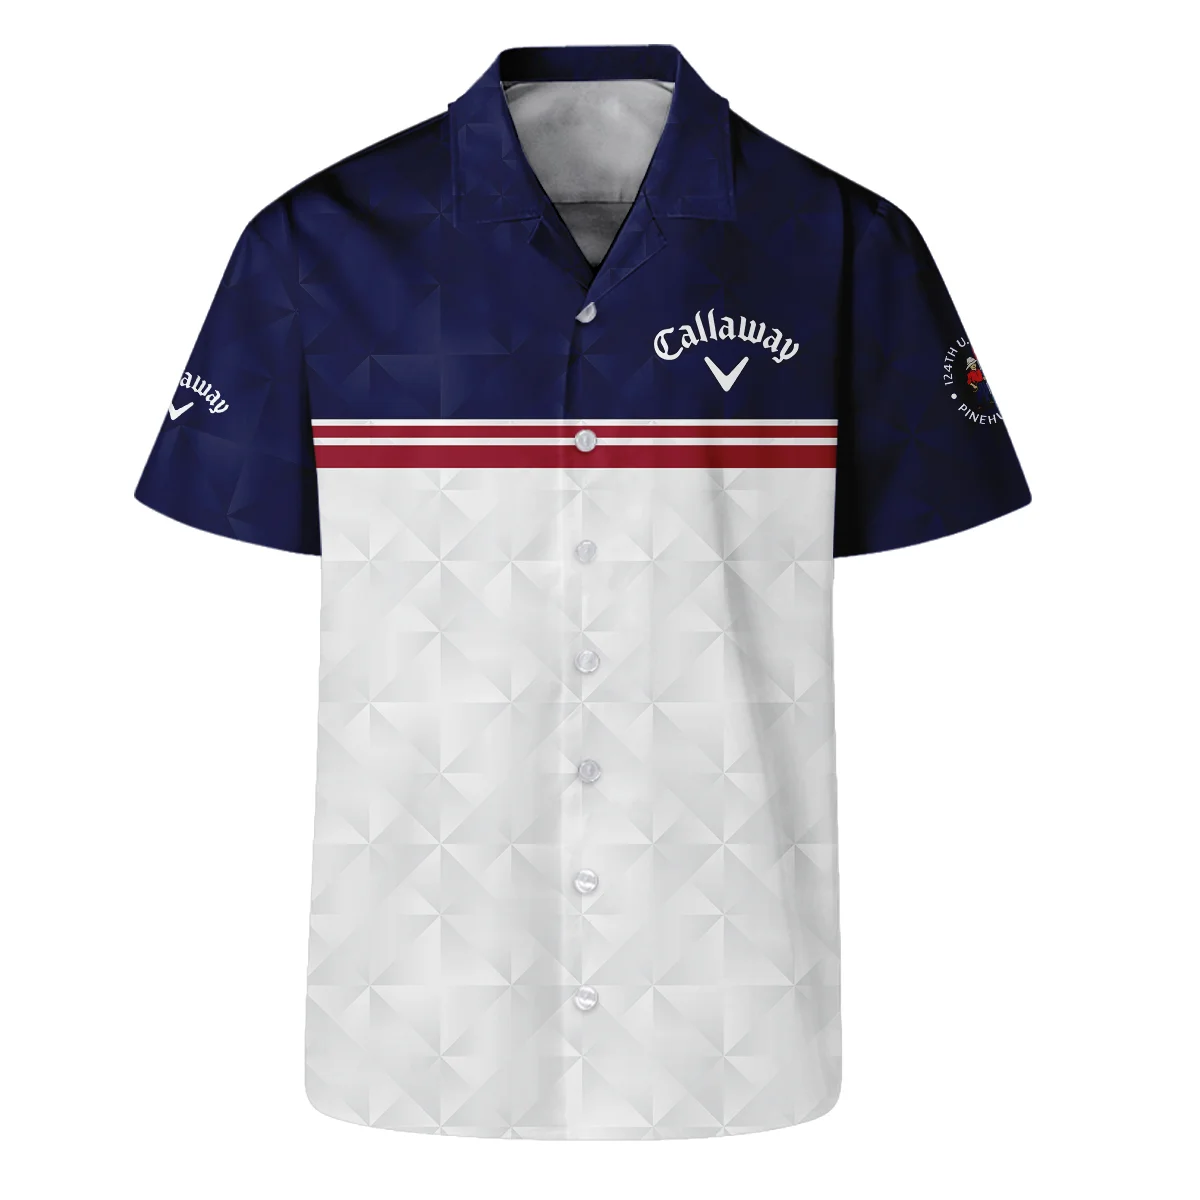 Golf Sport 124th U.S. Open Pinehurst Callaway Hoodie Shirt Dark Blue White Abstract Geometric Triangles All Over Print Hoodie Shirt